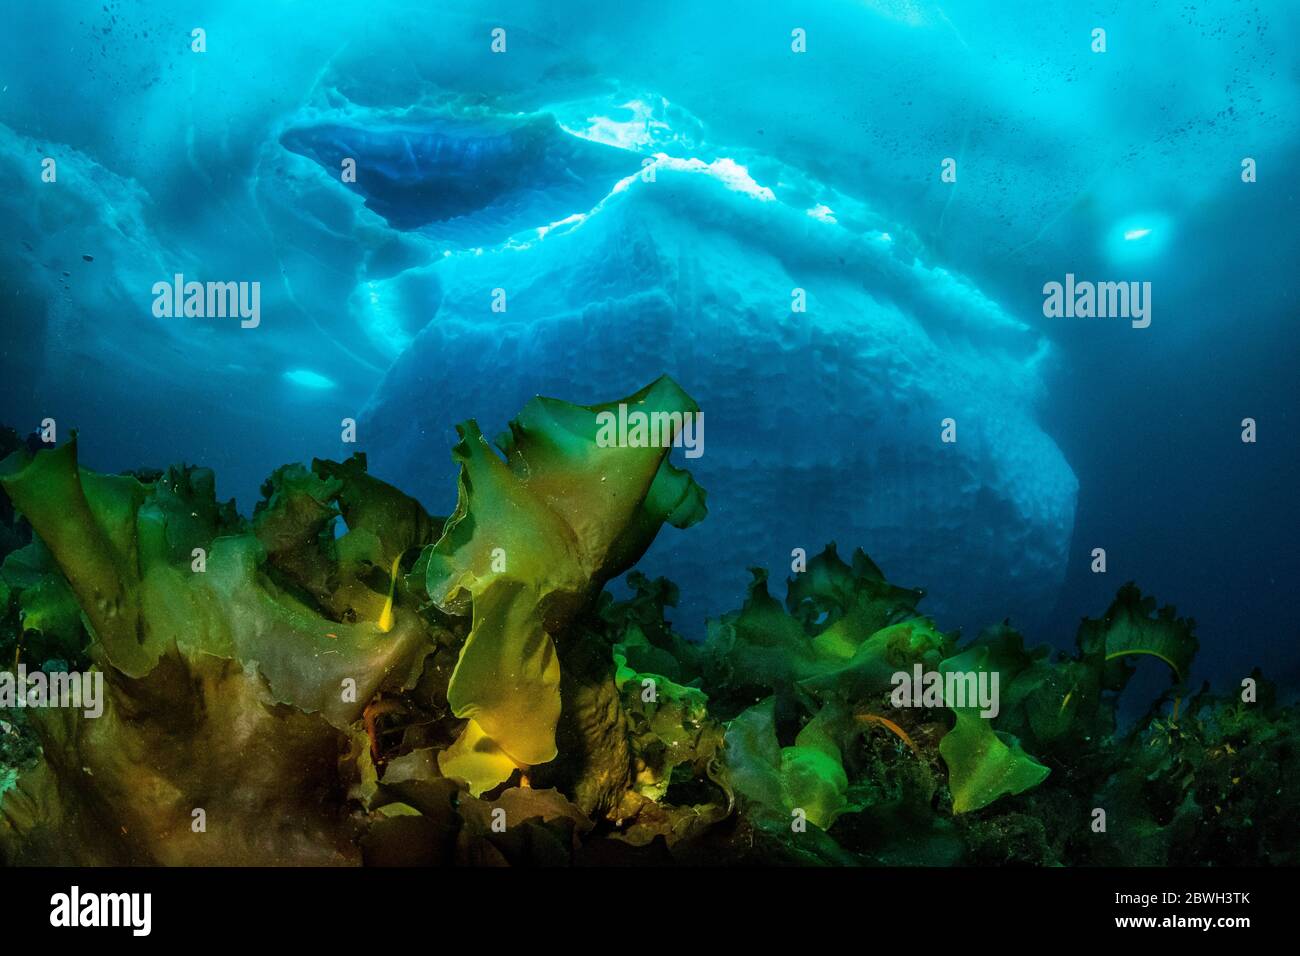 Varech, ceinture de mer ou tablier du diable, Saccharina latissima, devant un iceberg, Tasiilaq, Groenland, Océan Atlantique Nord Banque D'Images